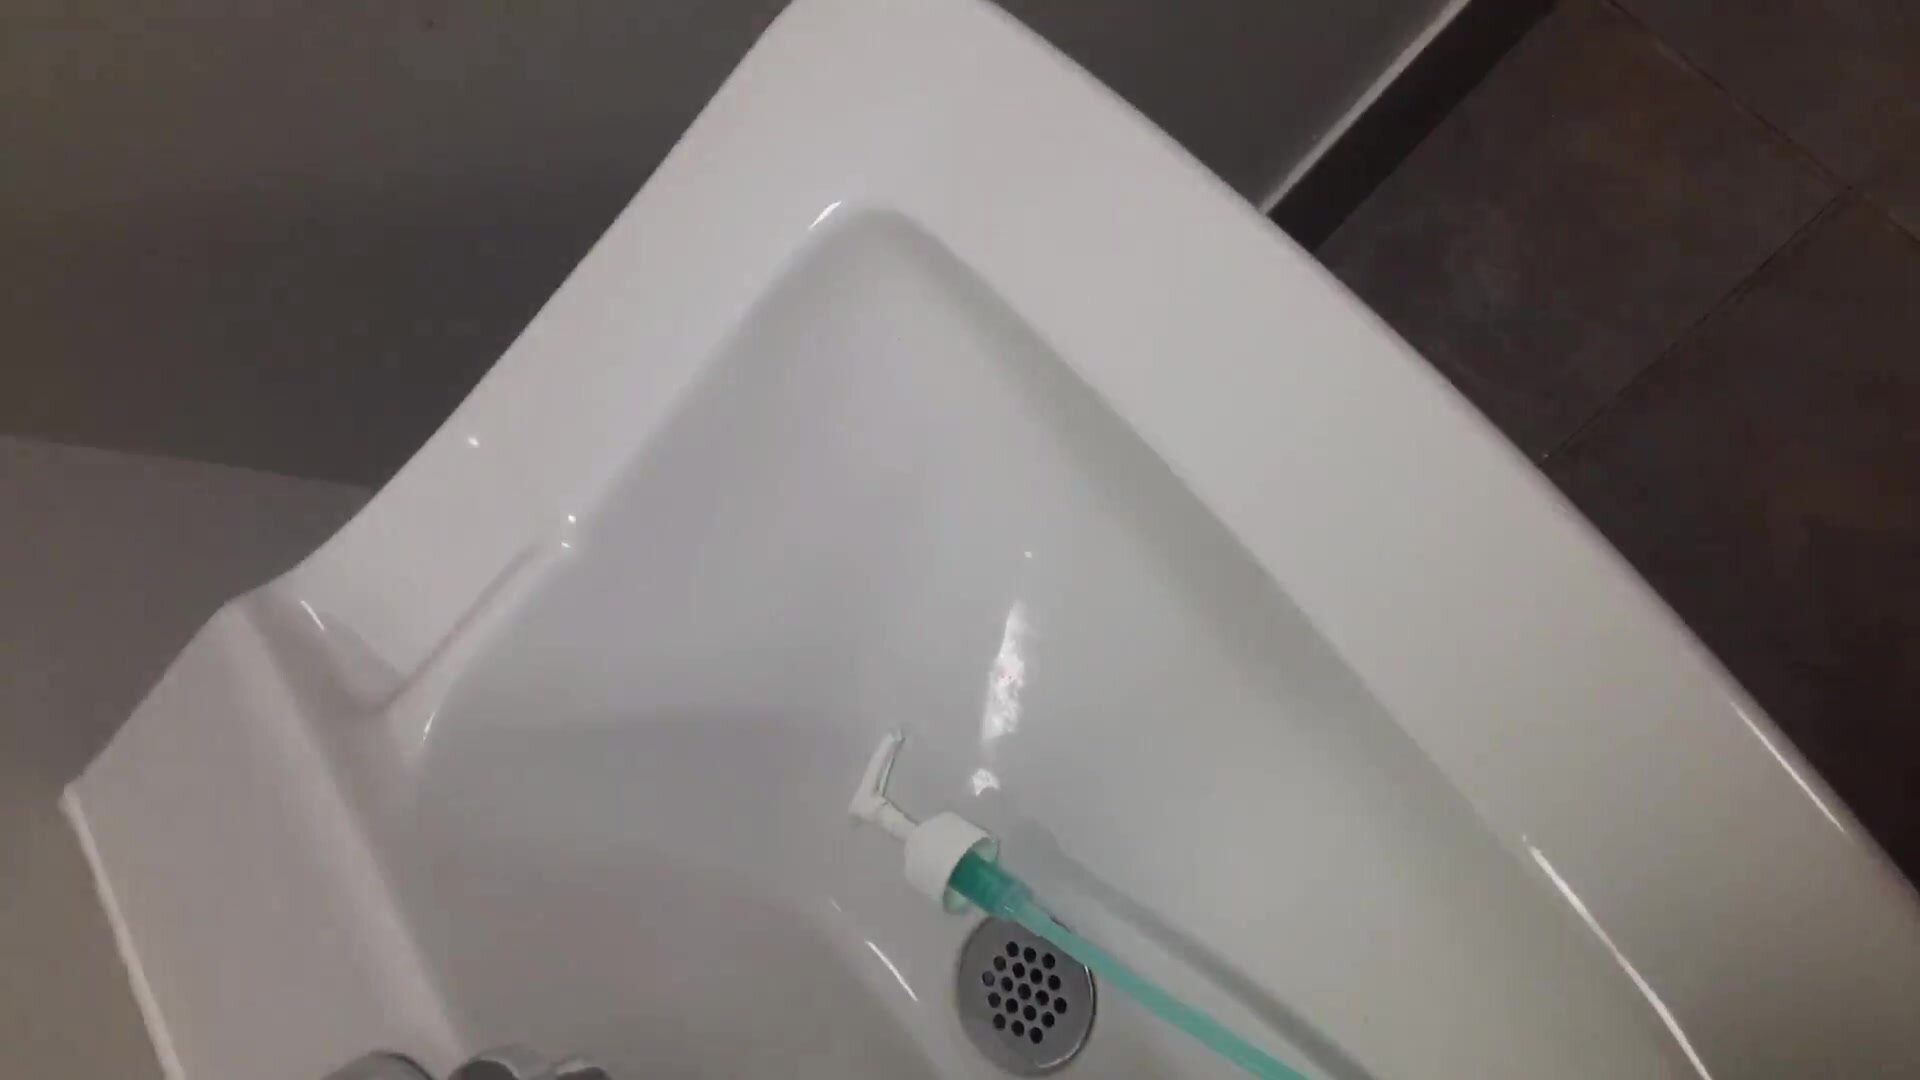 Piss public batheroom in soap dispenser